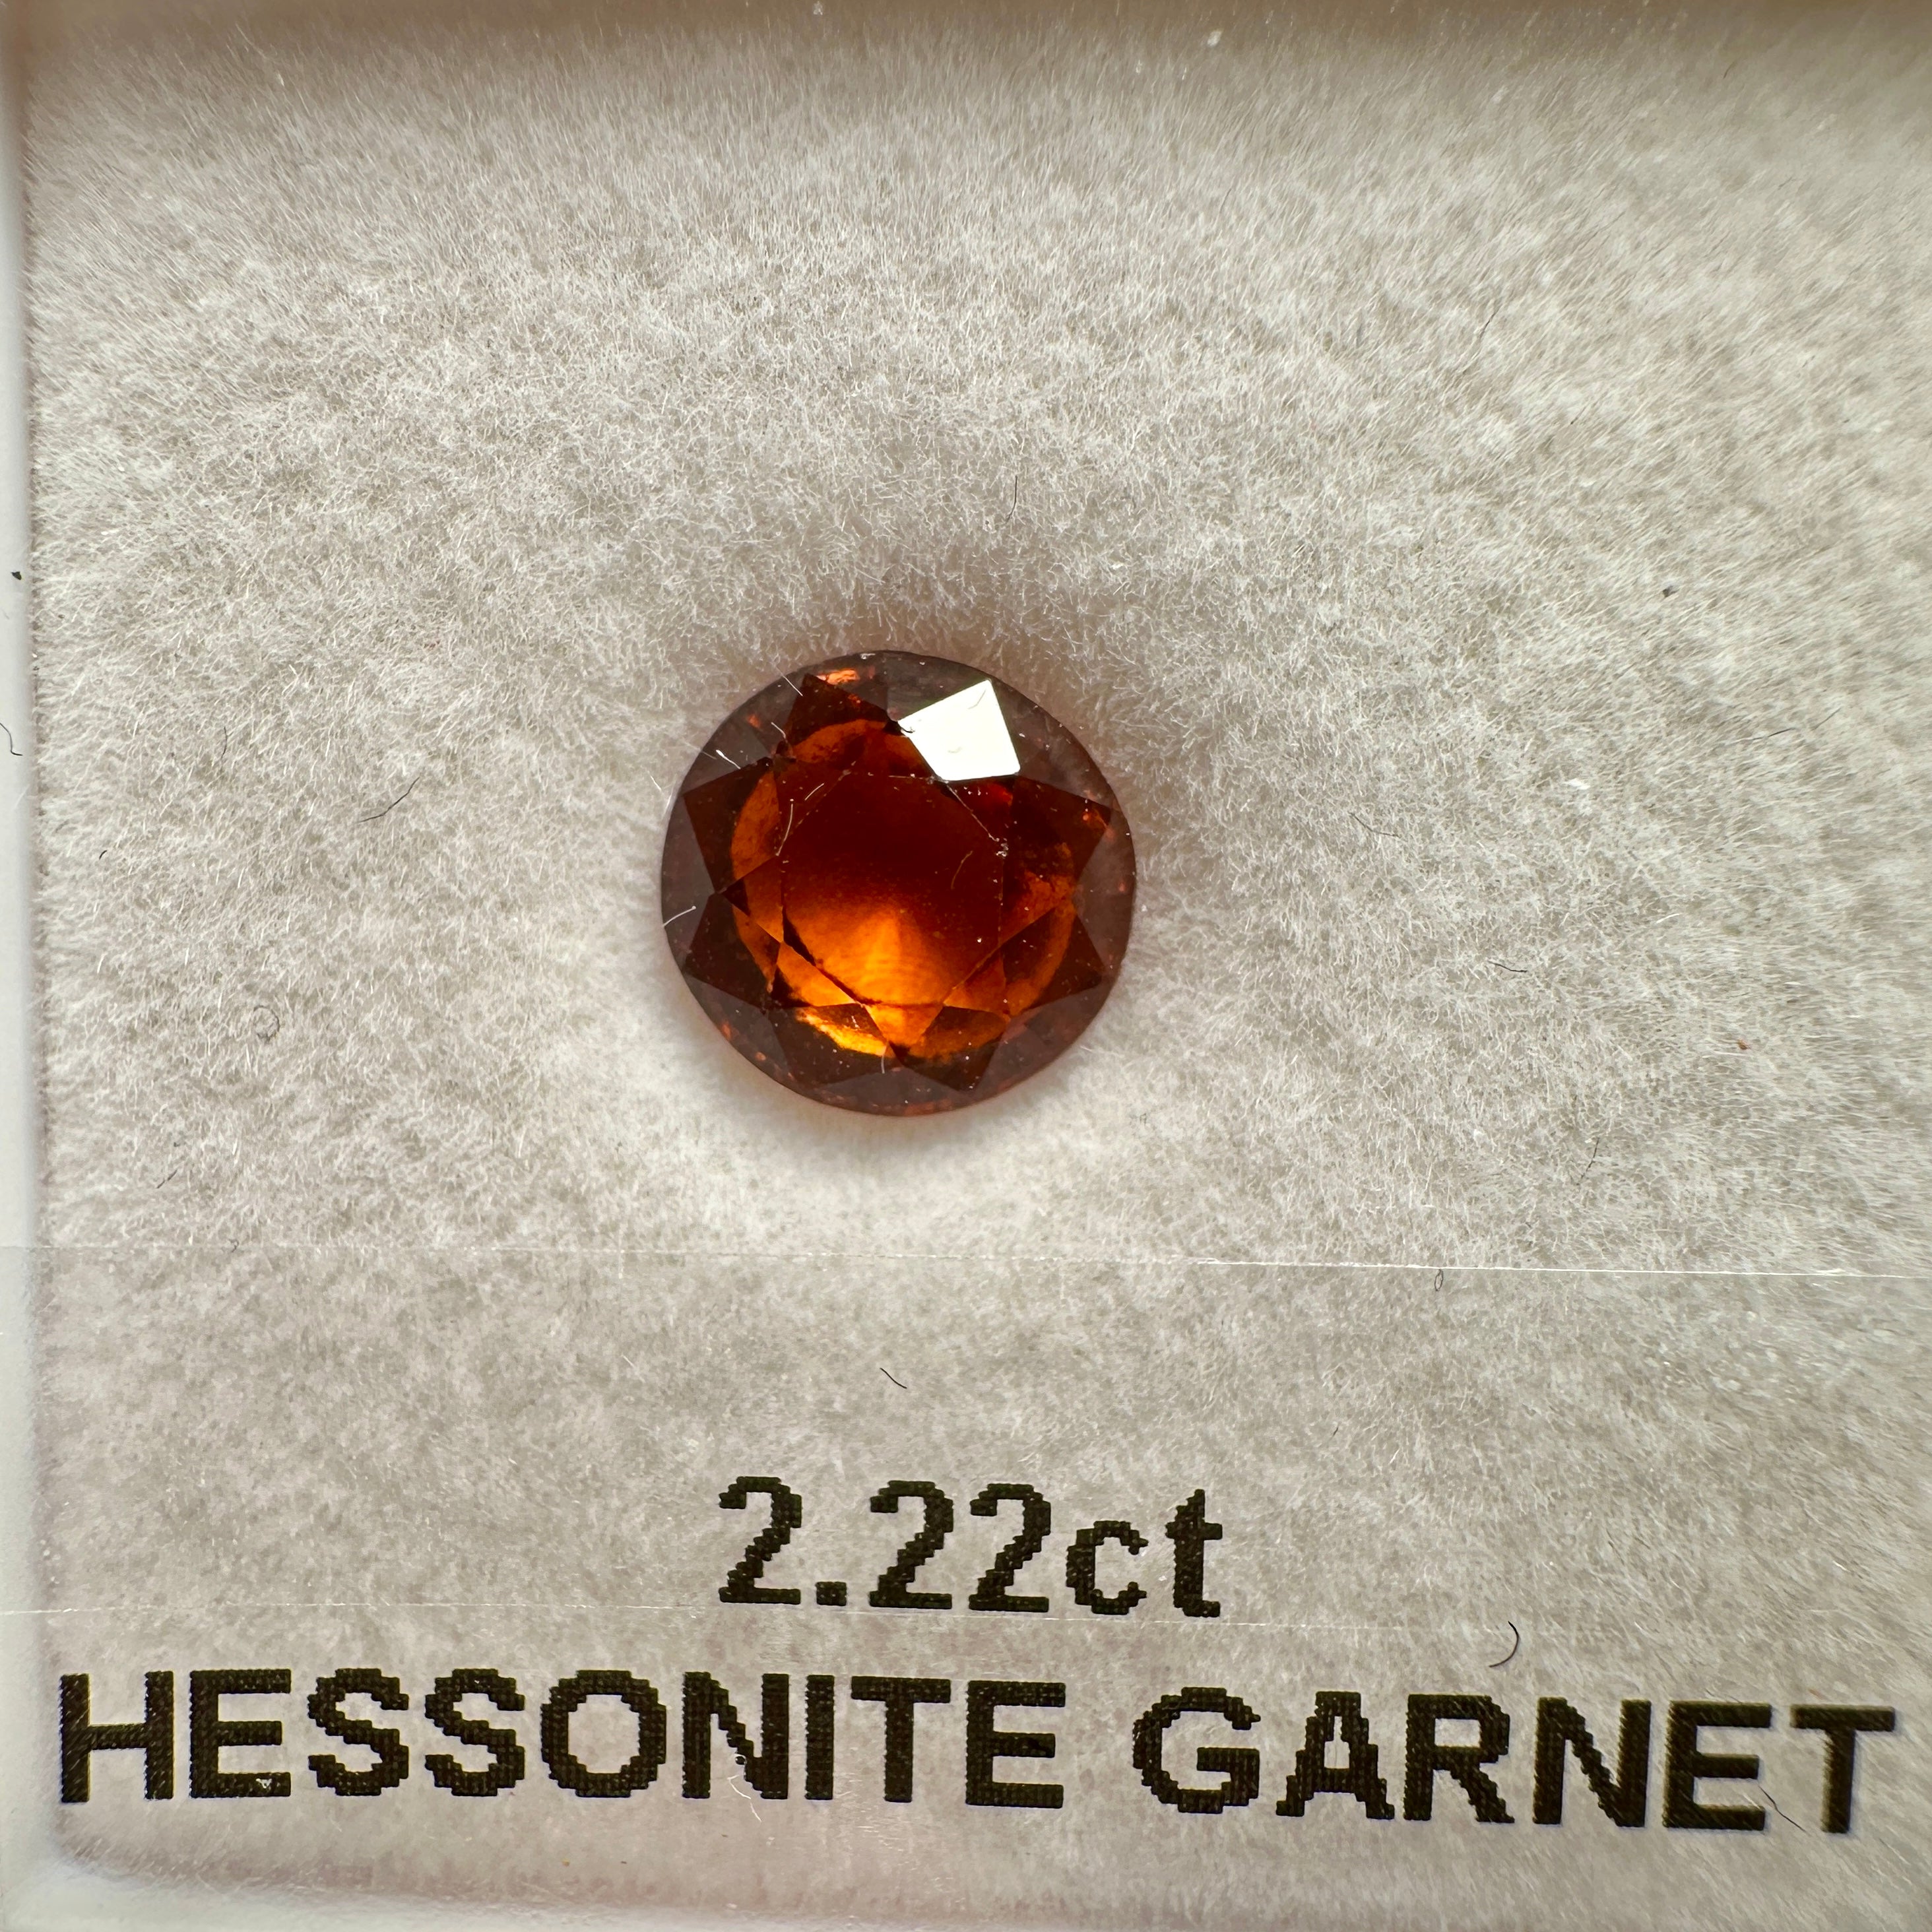 2.22ct Hessonite Garnet, Untreated Unheated, native cut